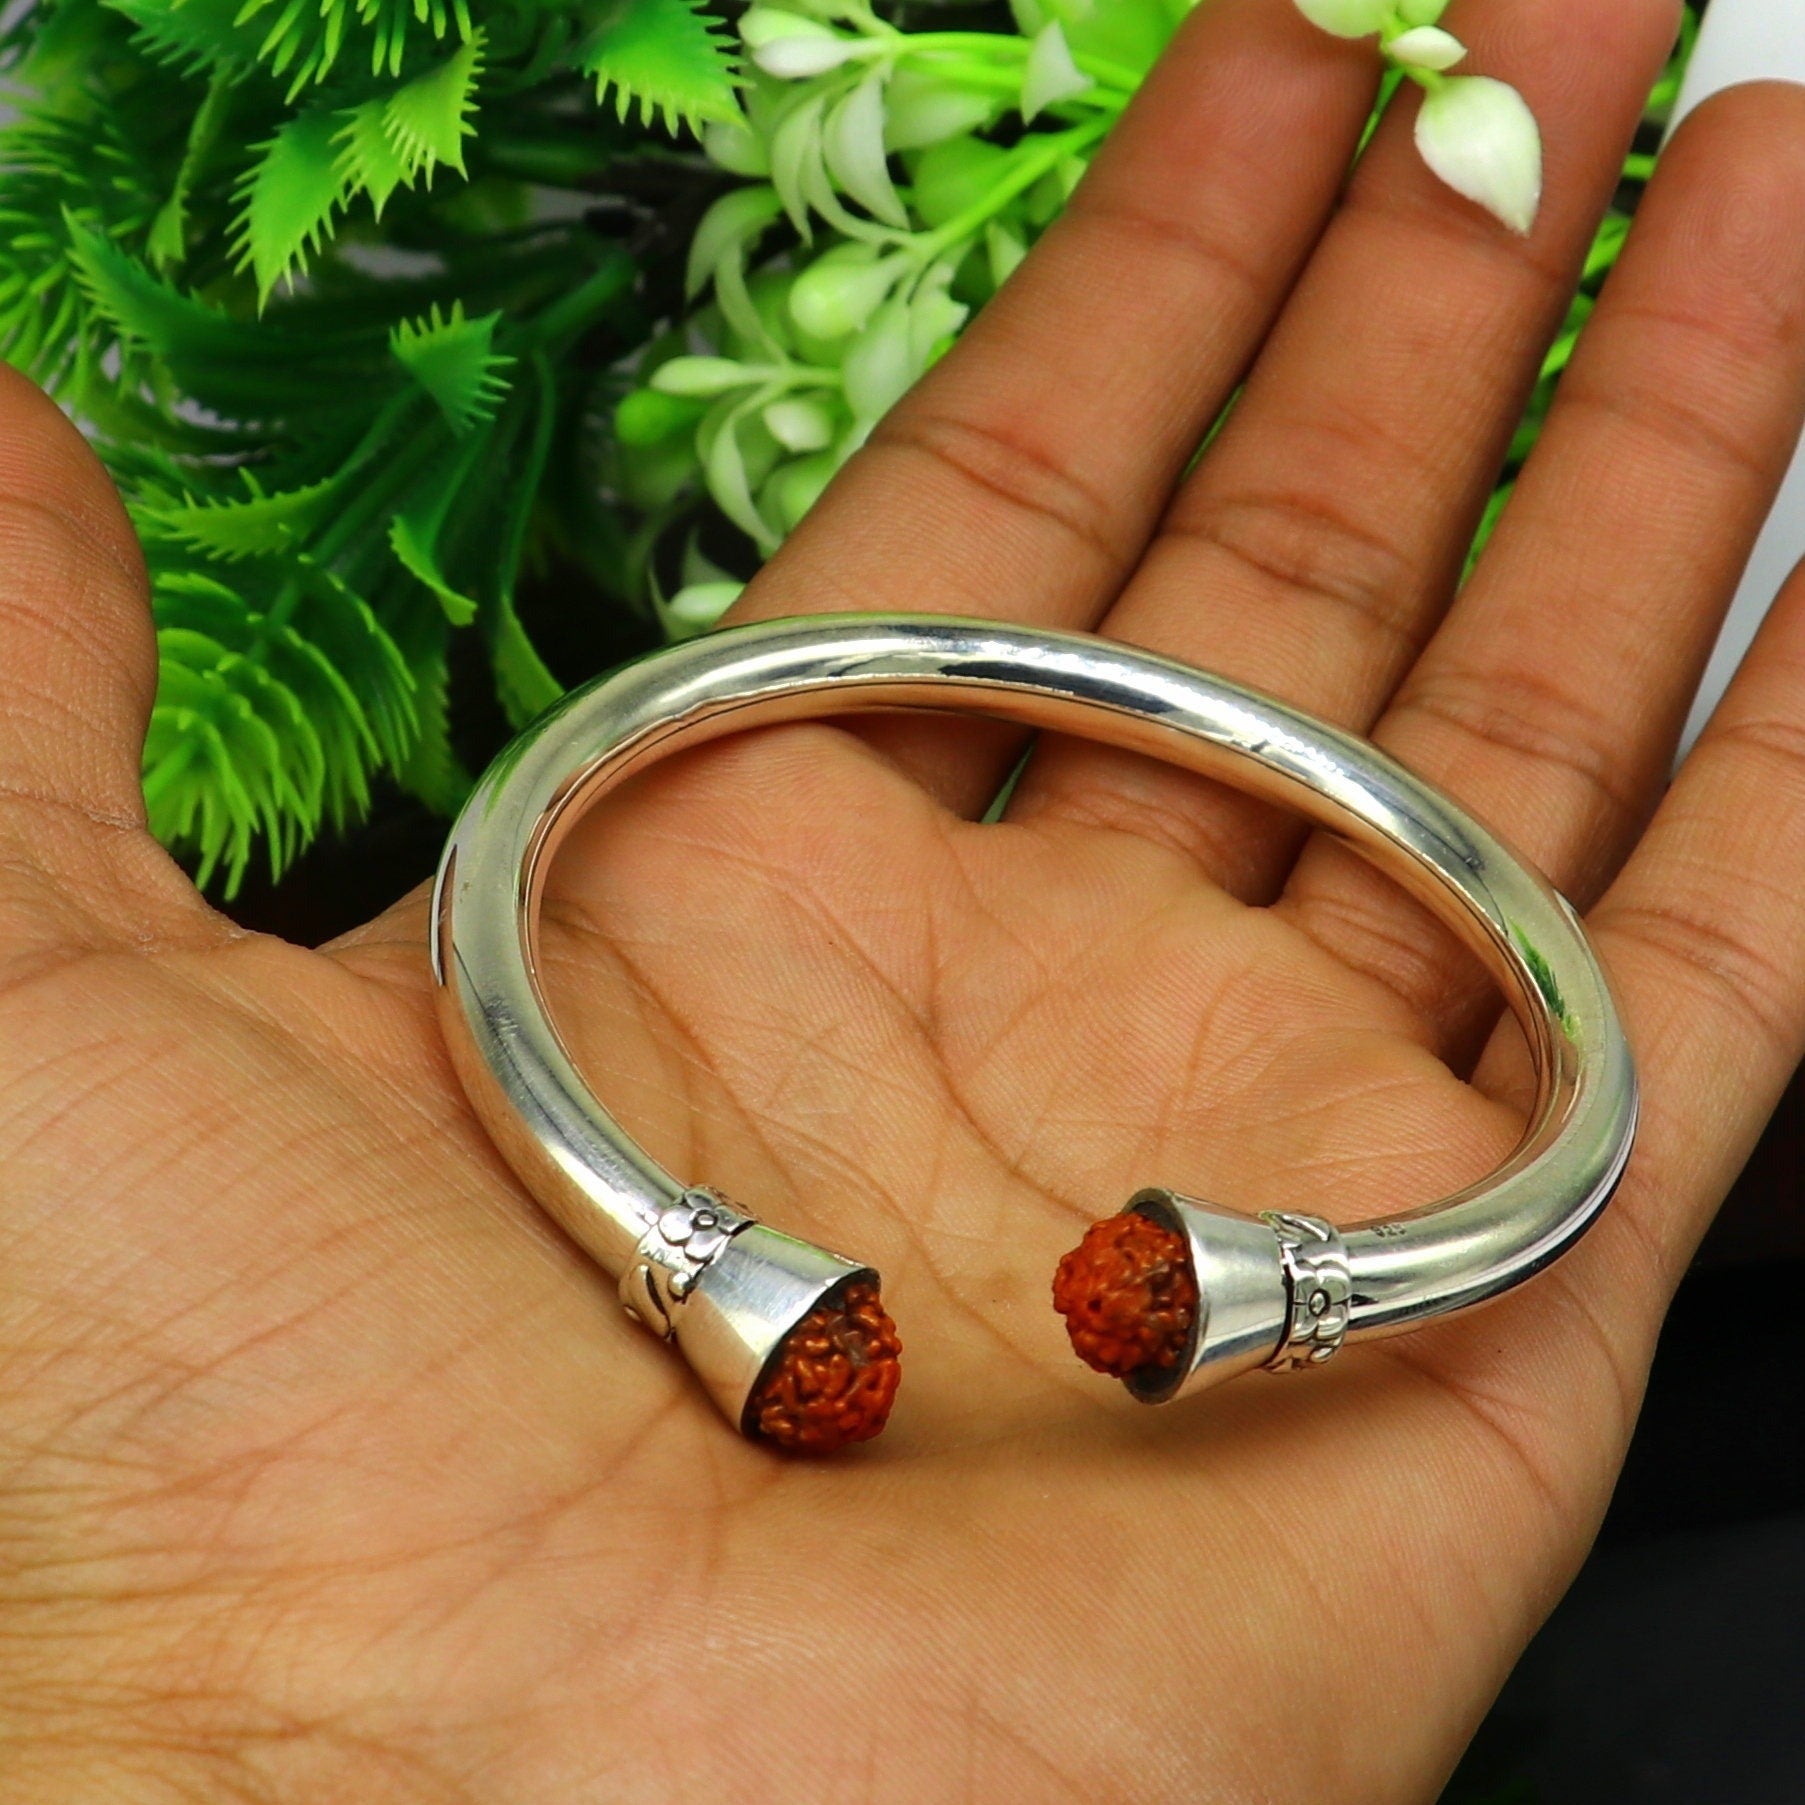 Exclusive 925 sterling silver handmade plain shiny stylish bangle bracelet kada, elegant tribal rudraksha bangle gifting jewelry nsk385 - TRIBAL ORNAMENTS